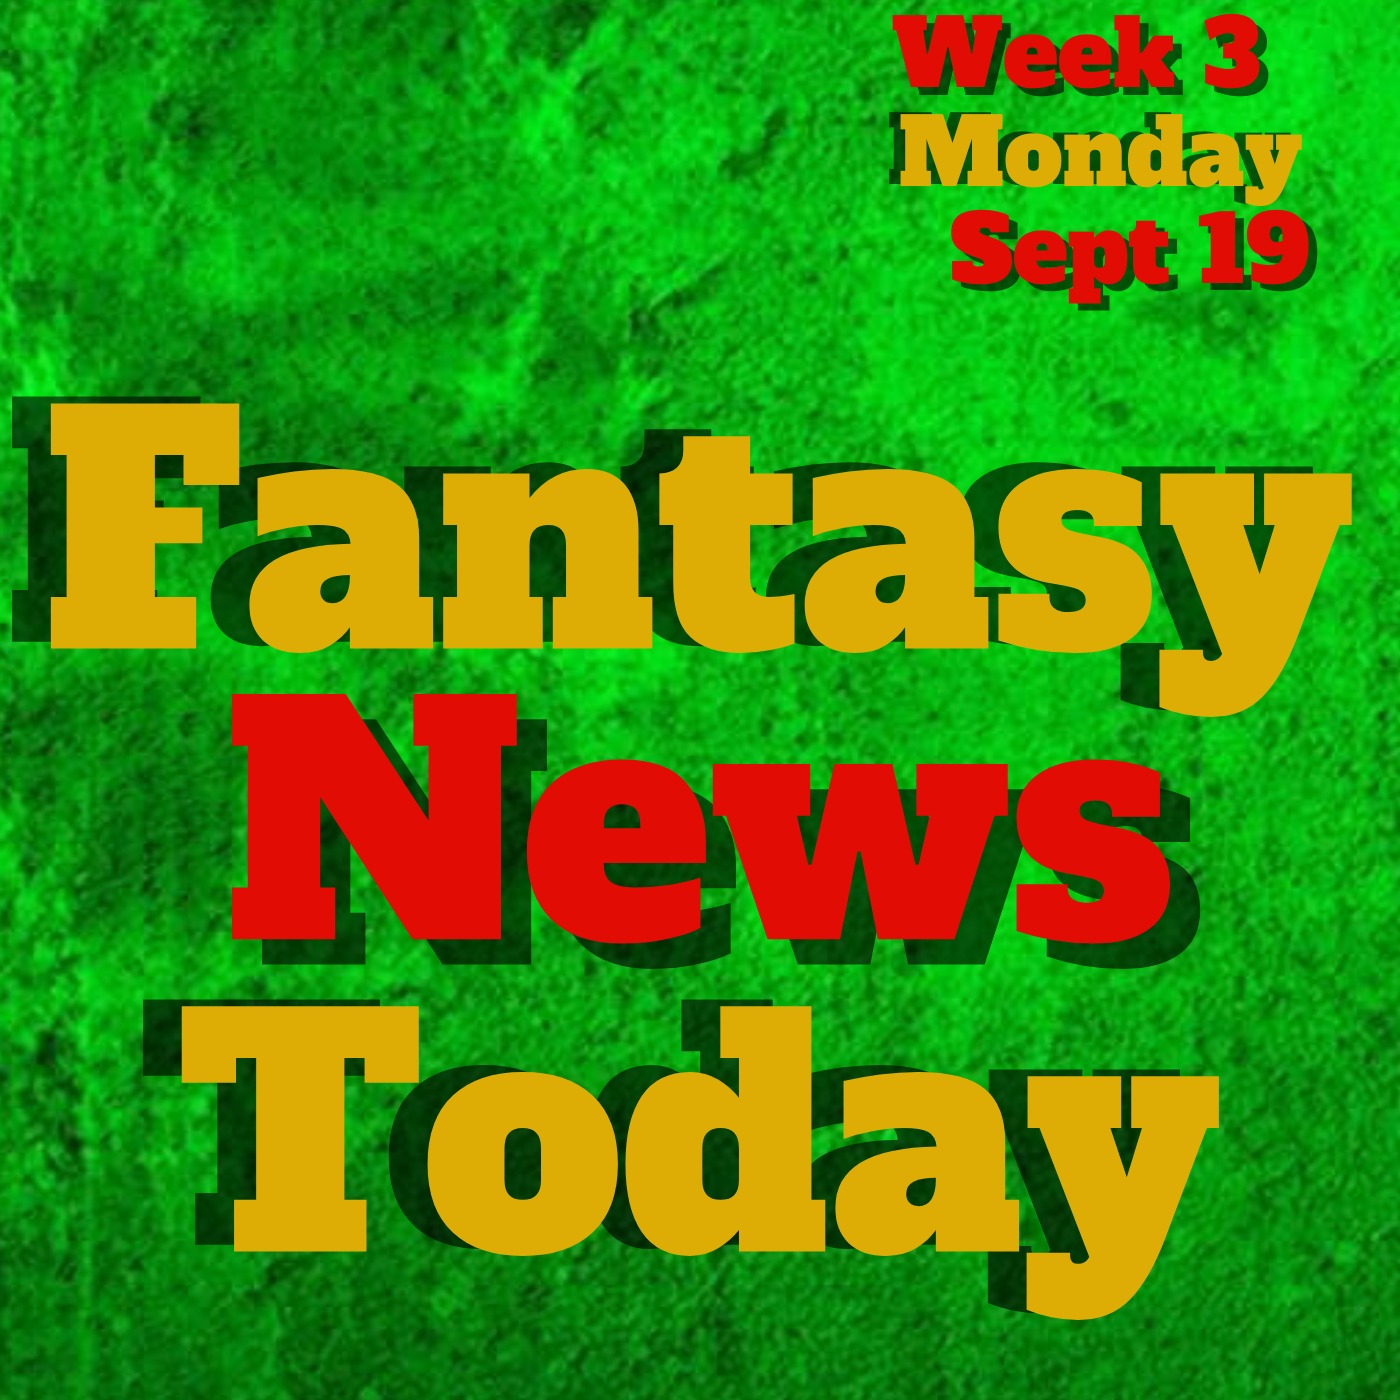 Fantasy Football News Today LIVE | Monday September 19th 2022